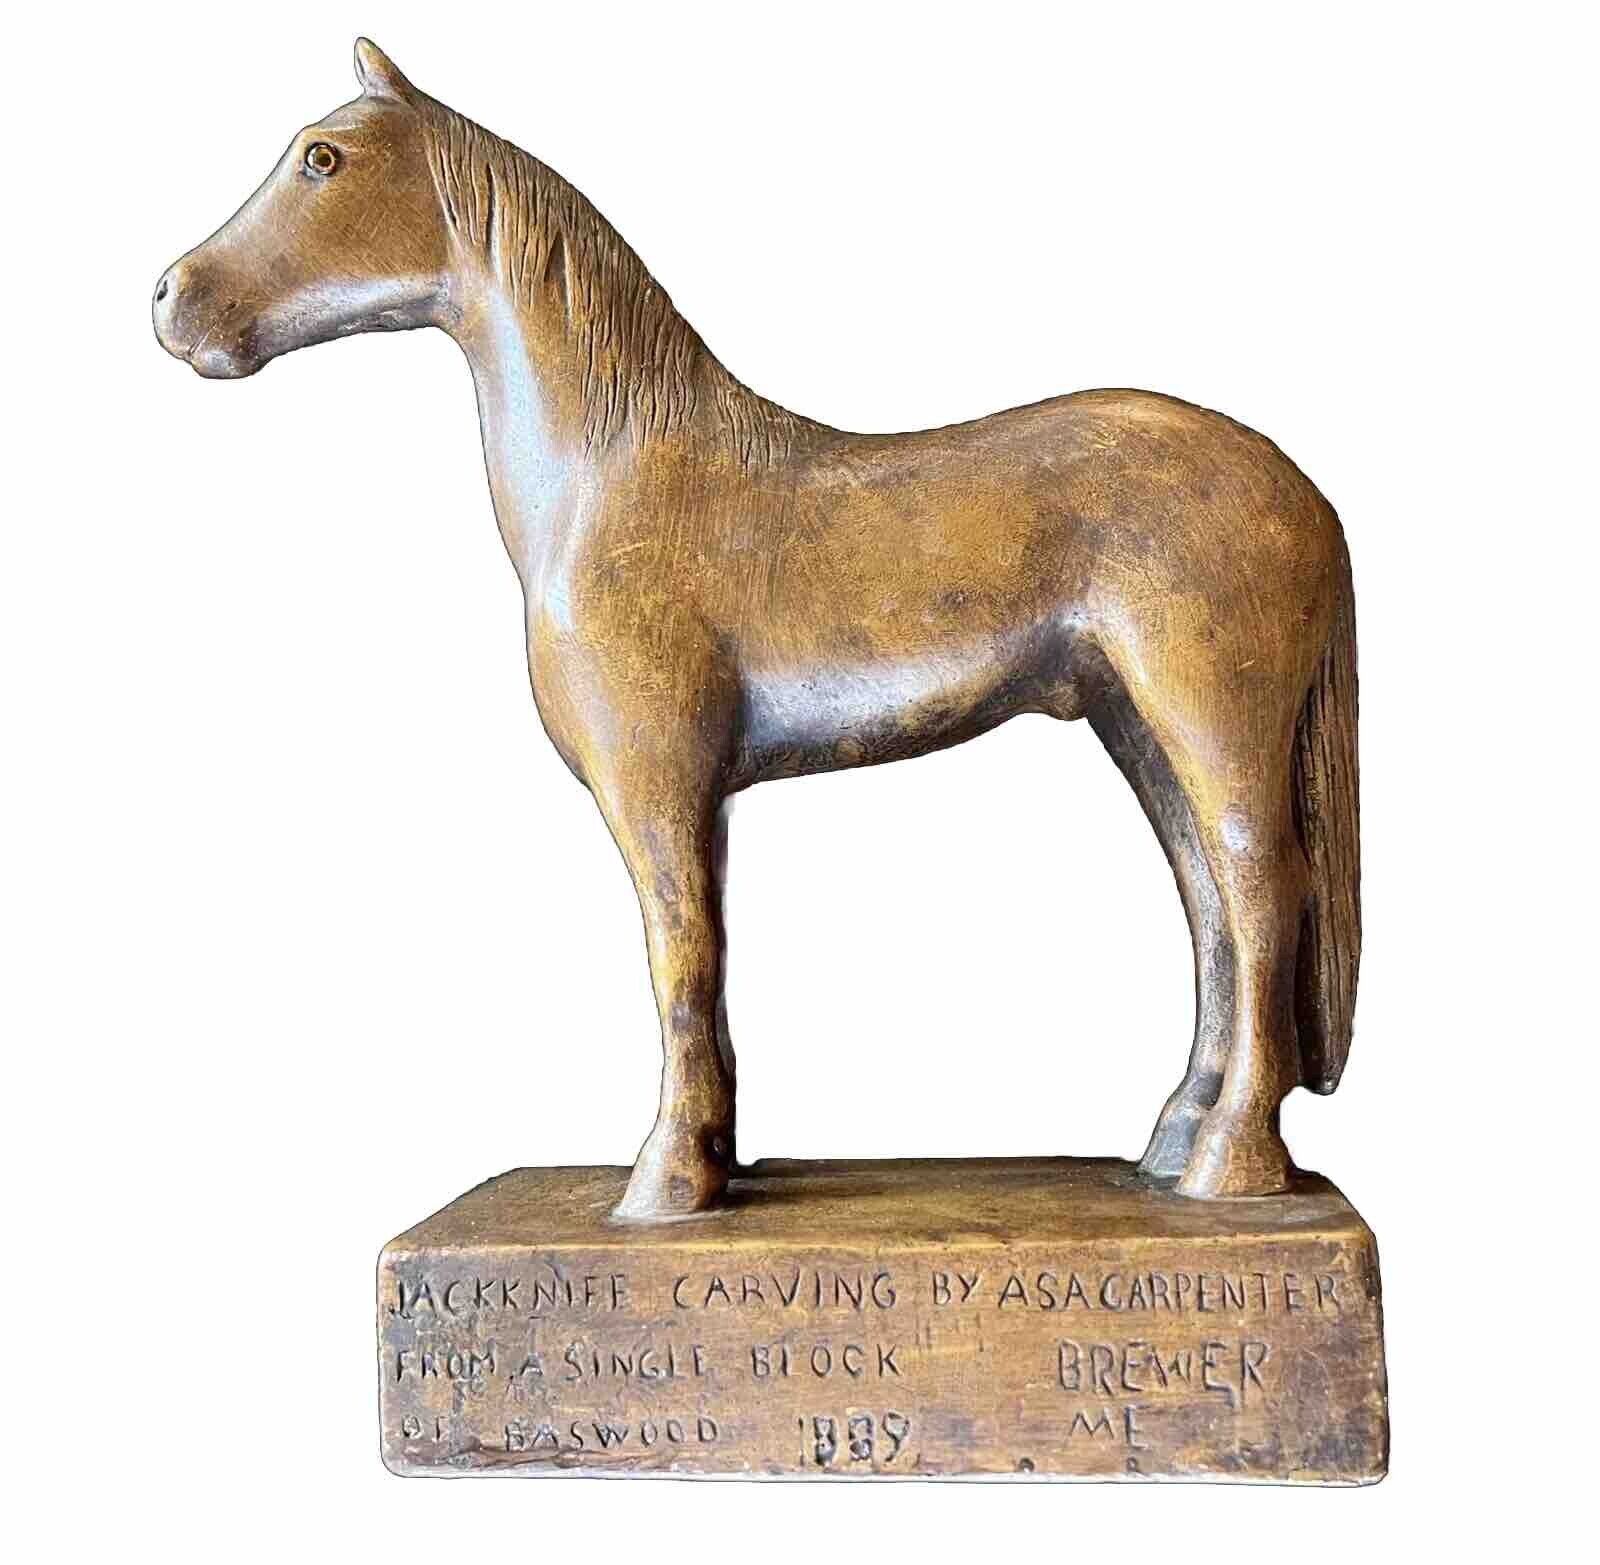 Vintage Plaster Horse Statue Sculpture by Asa Carpenter “Jackknife” c1940s